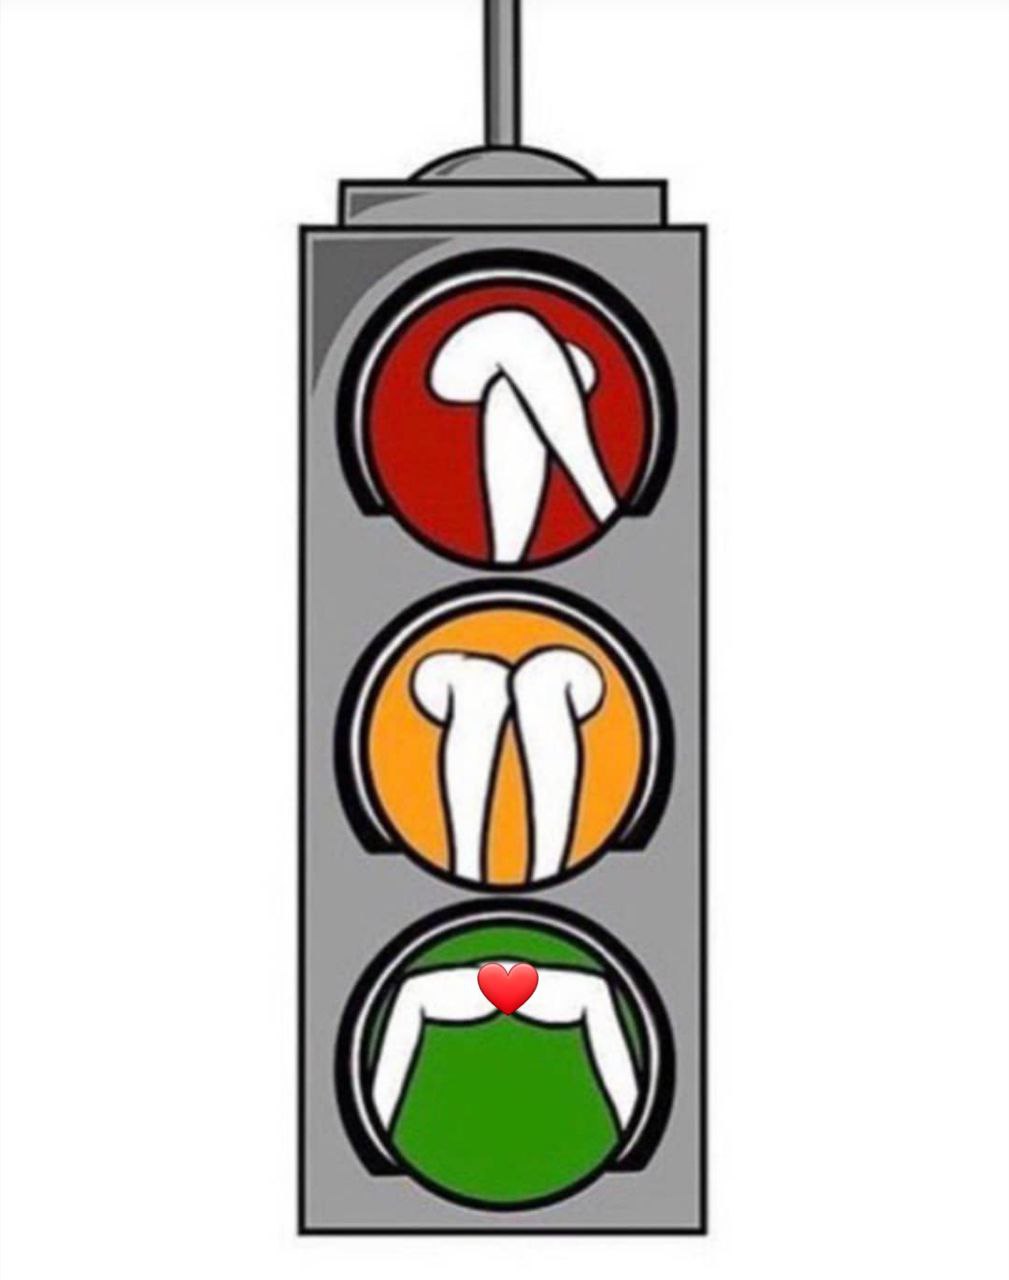 Иллюстрация светофора на прозрачном фоне